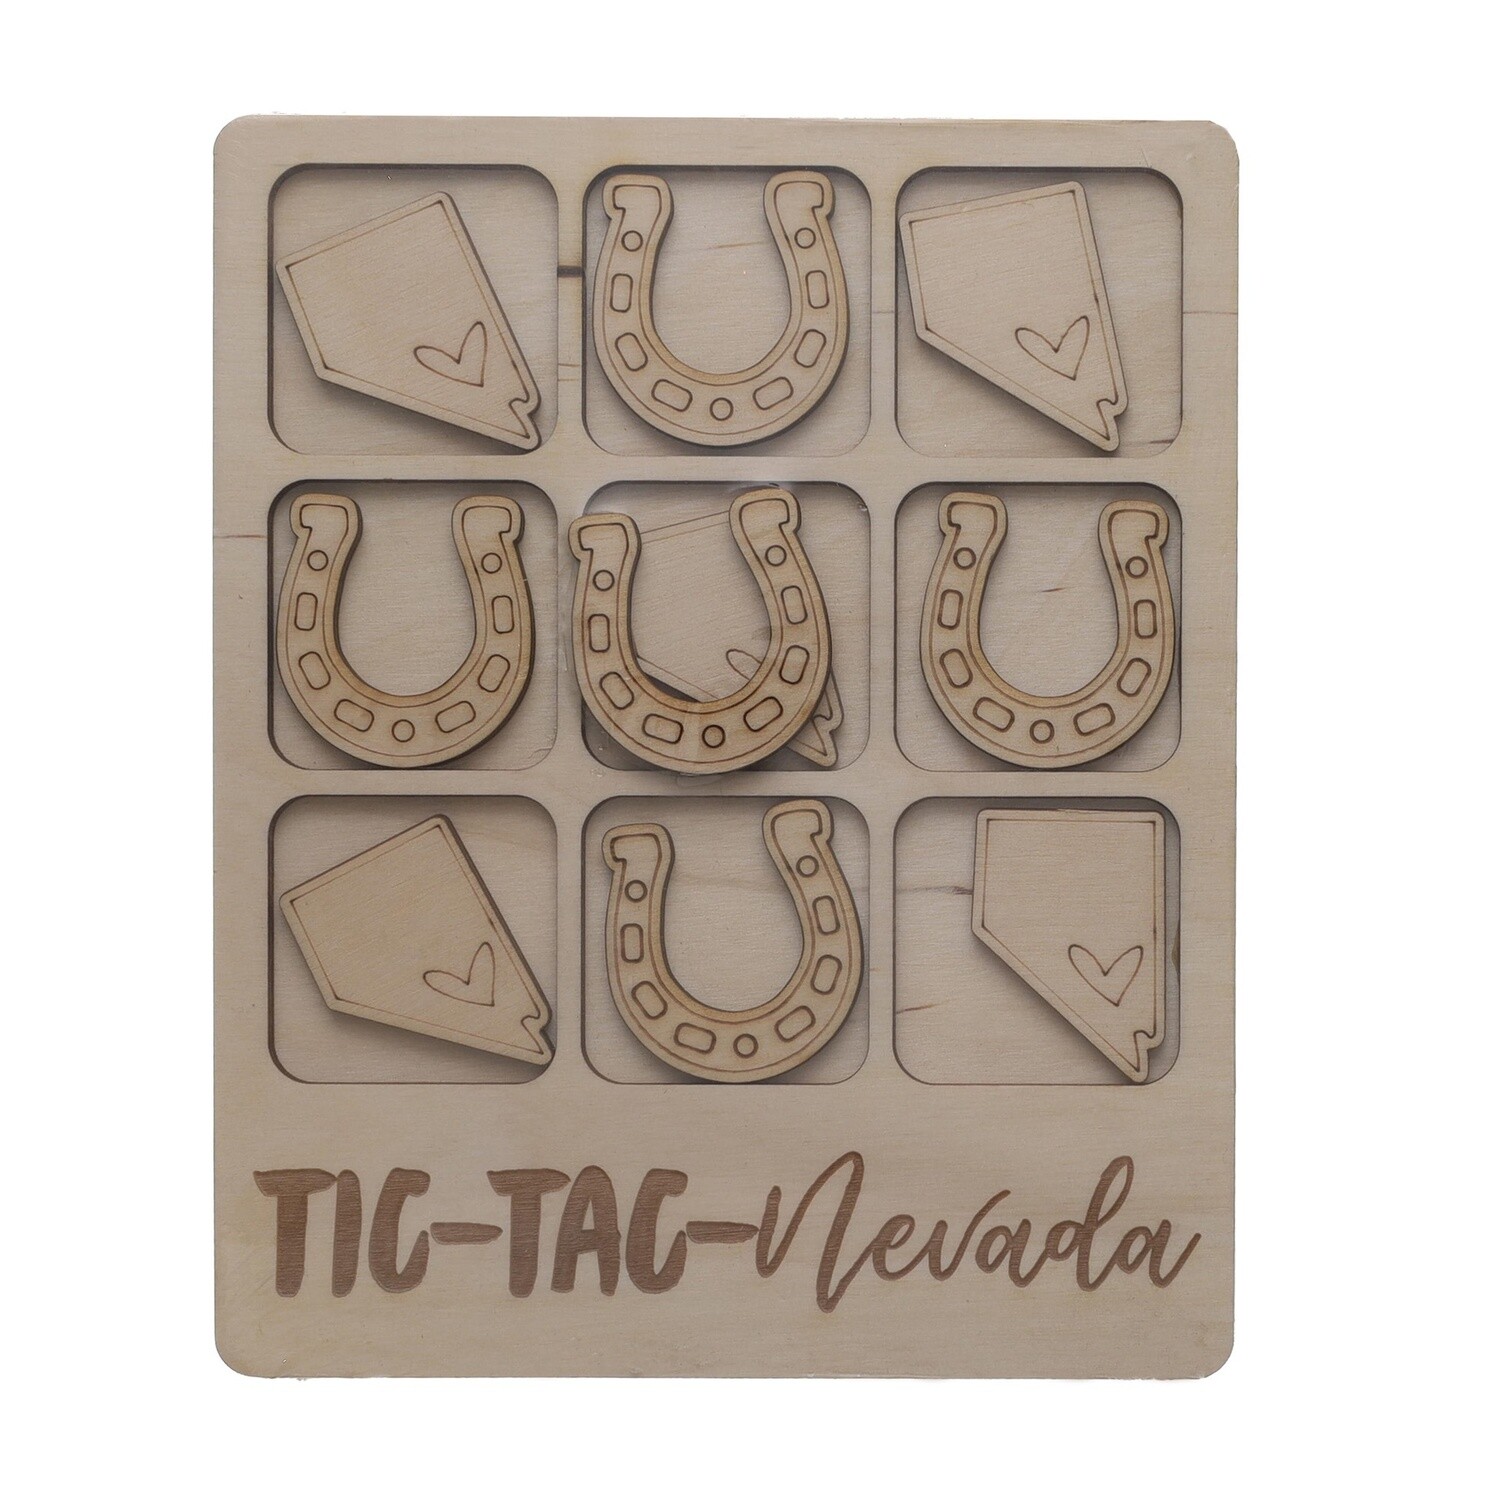 Tic-Tac-Nevada